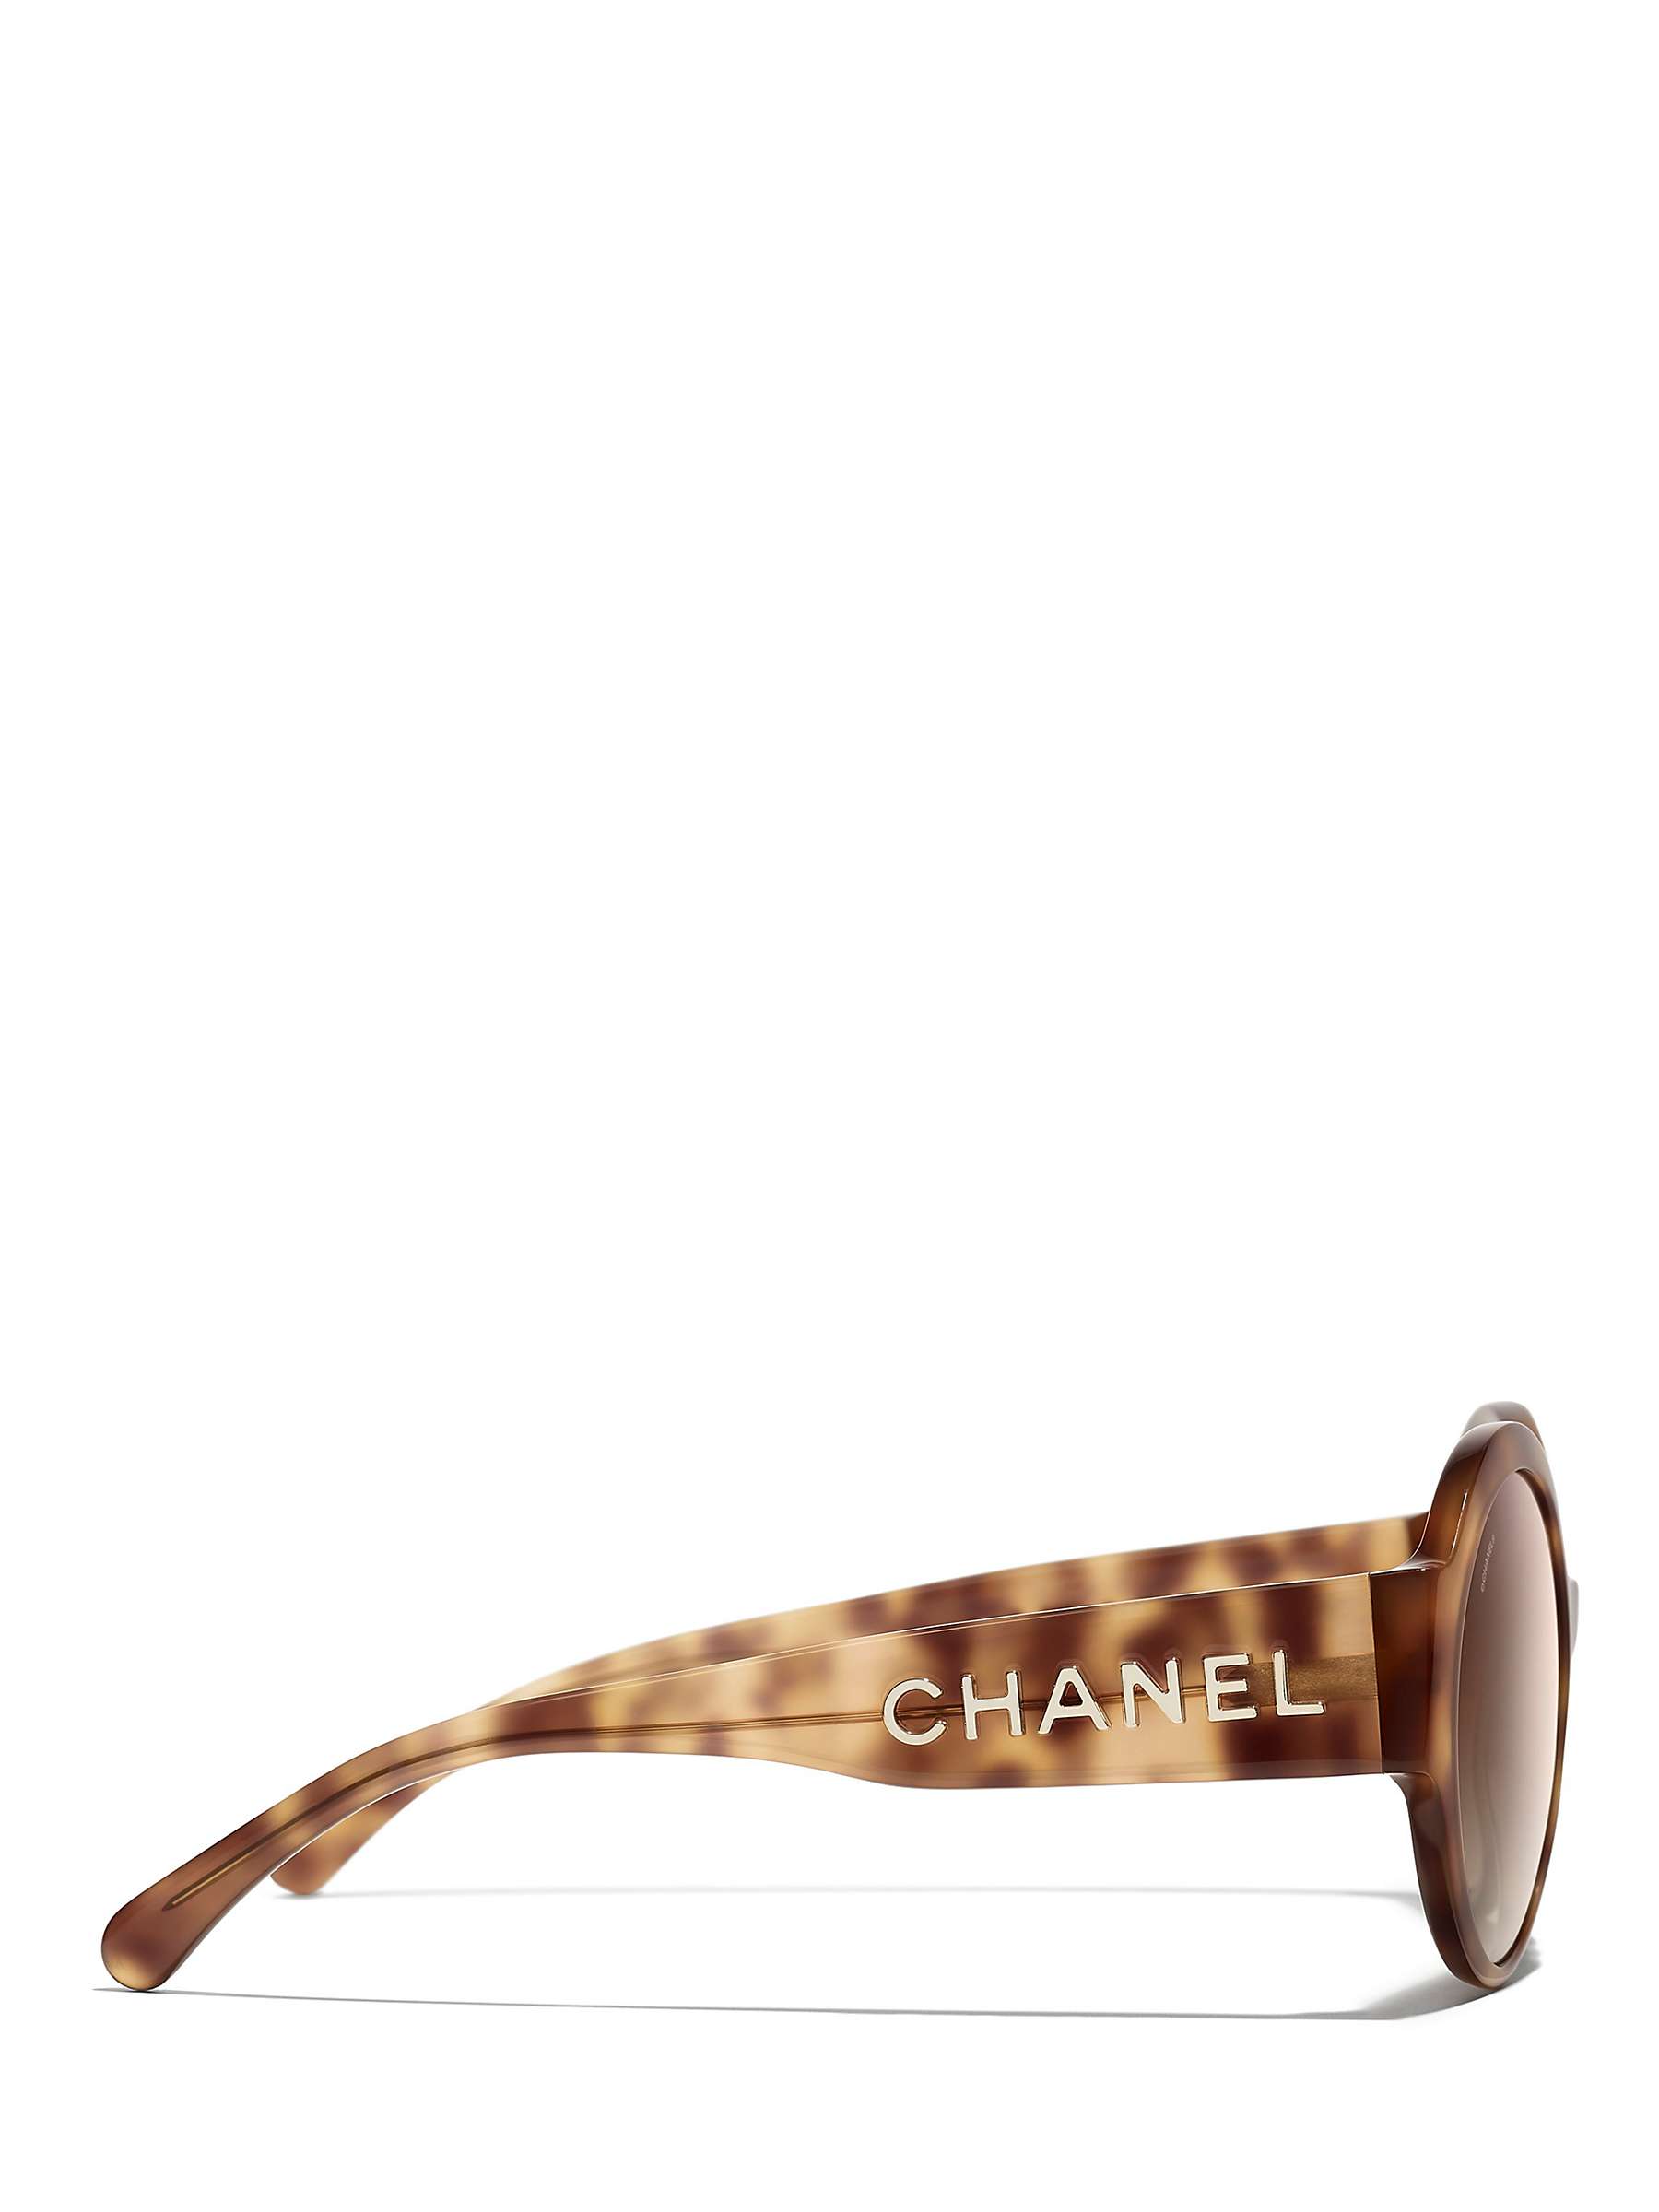 Buy CHANEL Oval Sunglasses CH5410 Havana/Brown Gradient Online at johnlewis.com